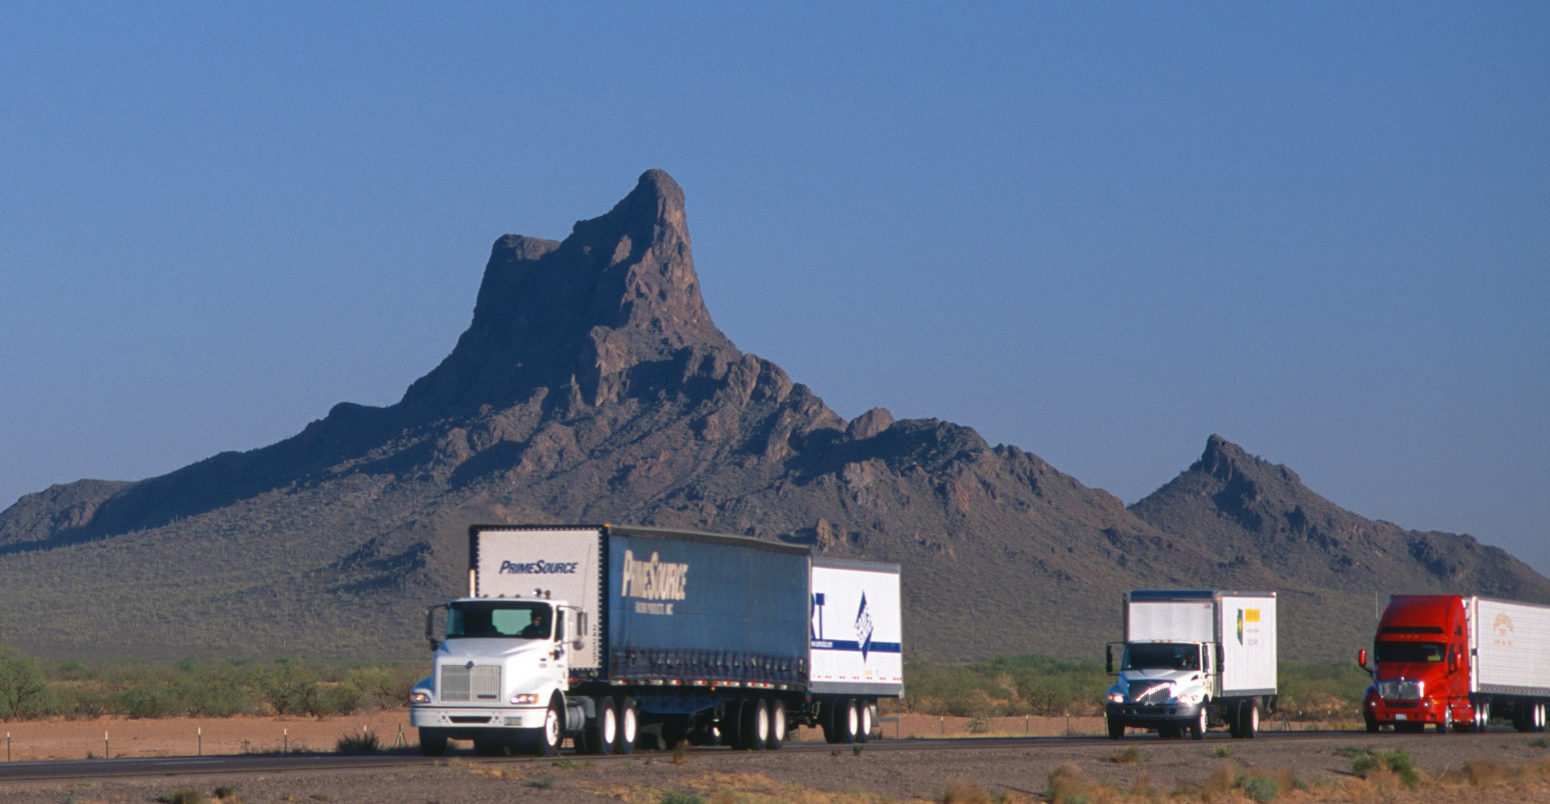 Trucks on desert highway in Arizona, US. Credit: Chris Alan Selby / Alamy Stock Photo. BKNB4K